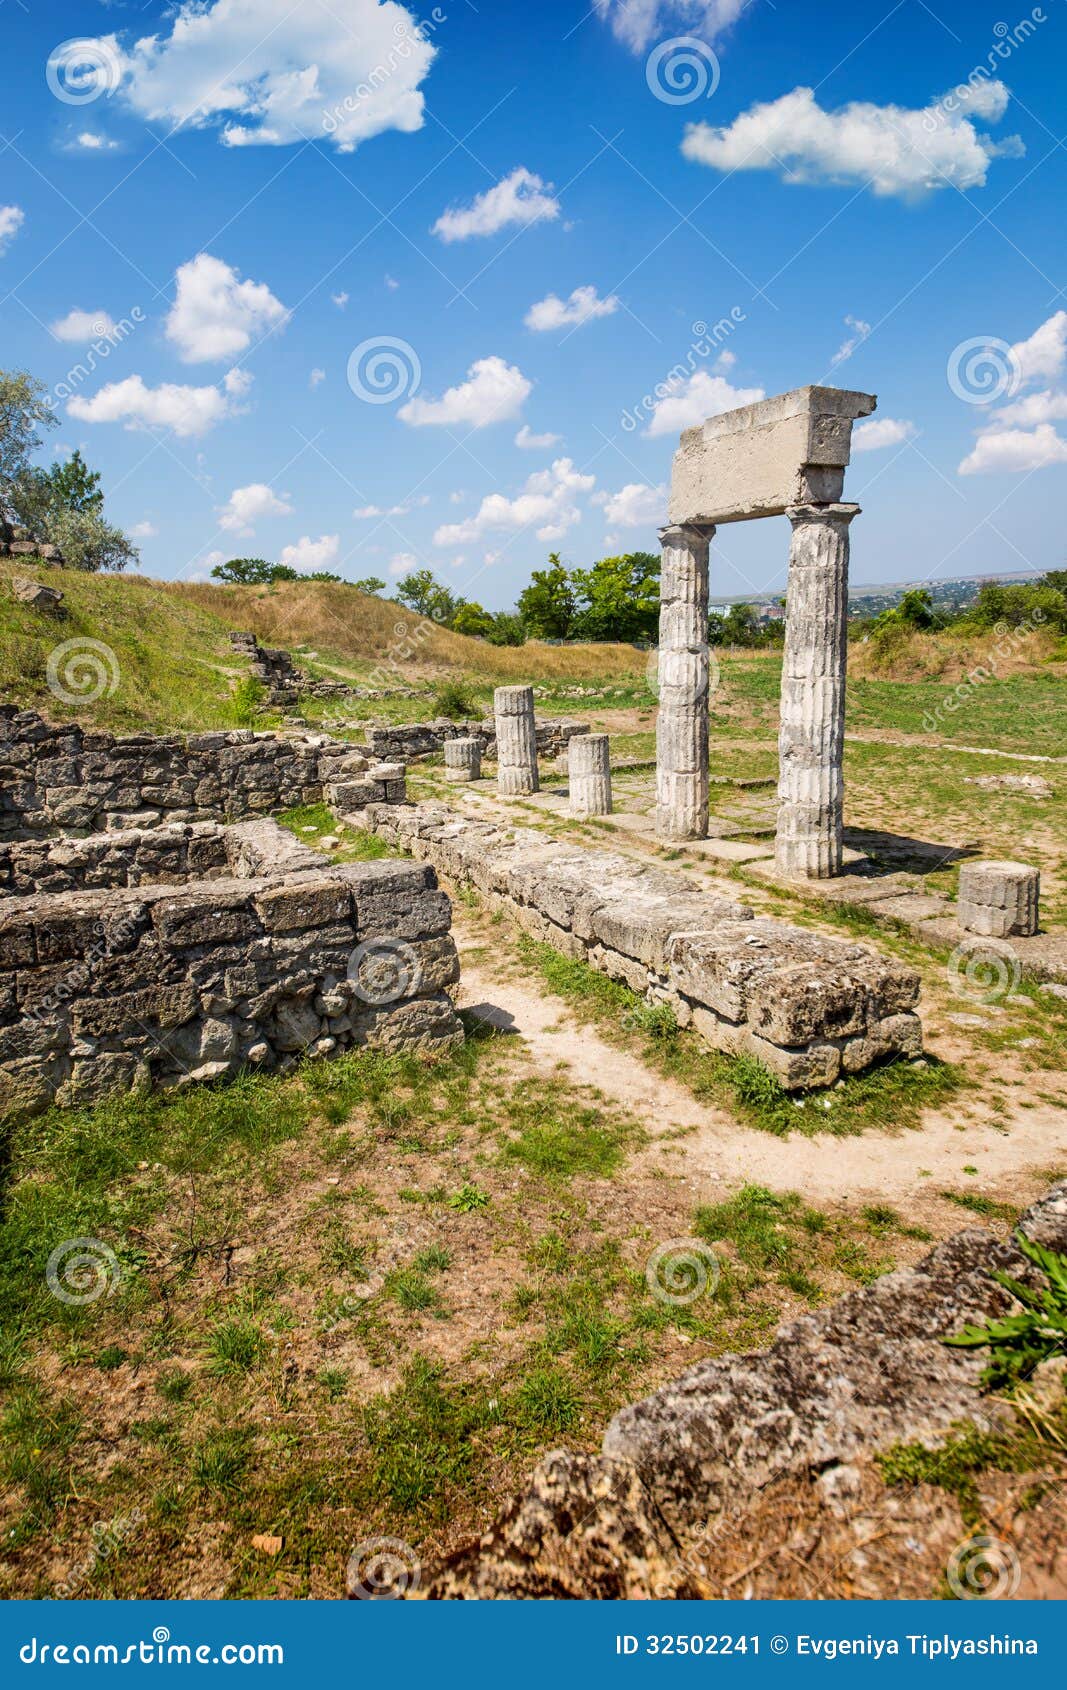 Panticapaeum ancient ruins of Kerch